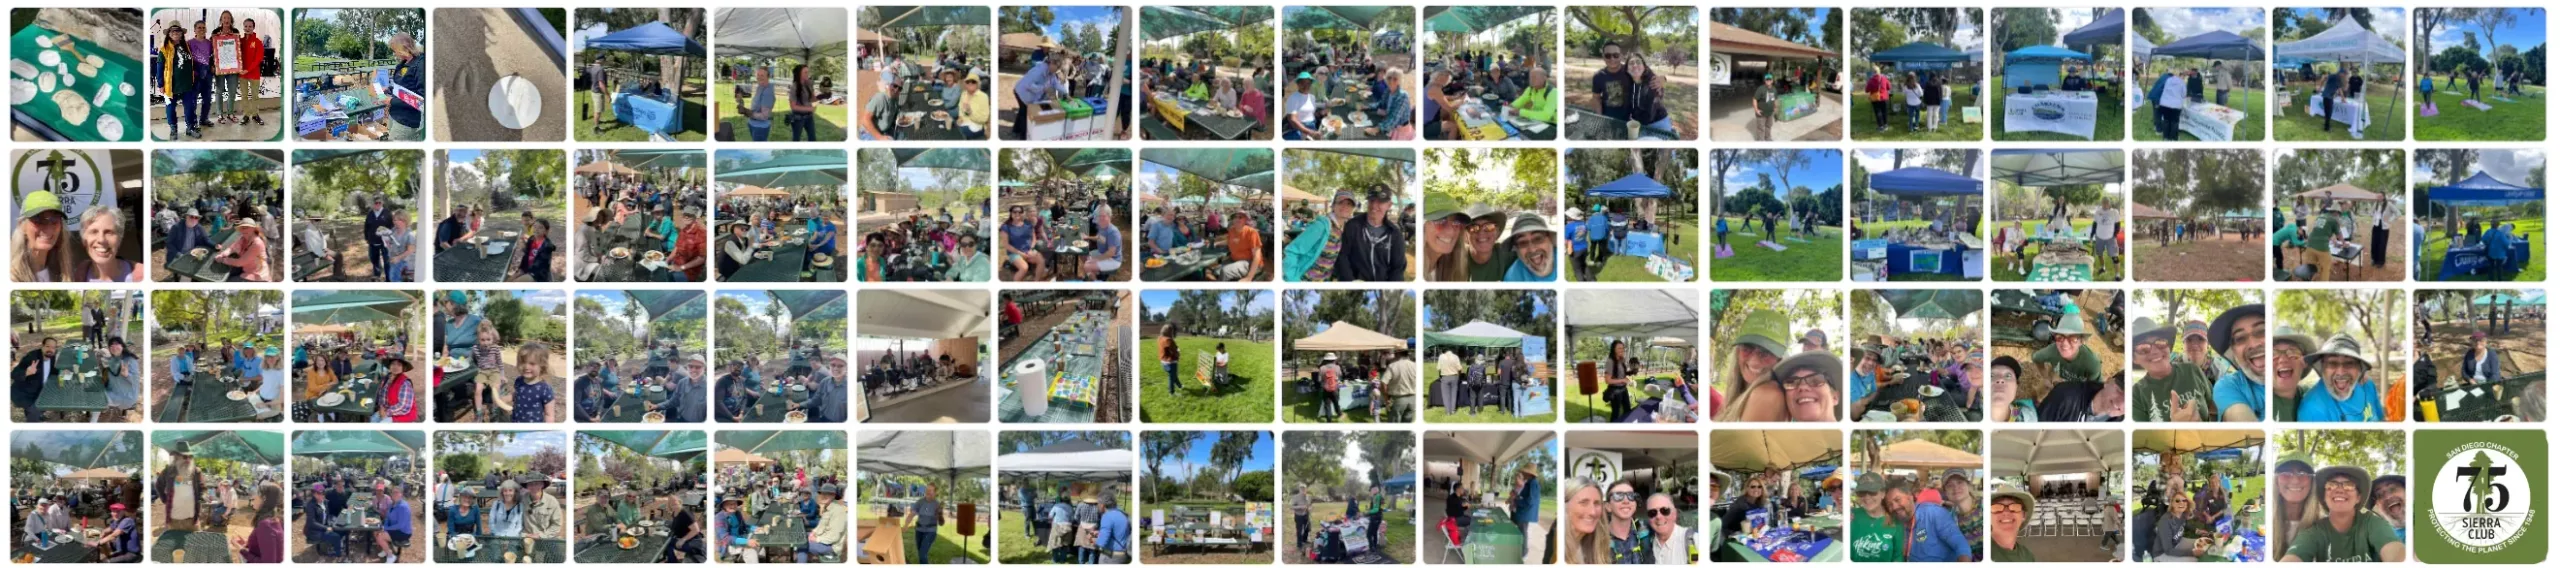 Sierra Club San Diego 75th Anniversary Picnic Photo Collage